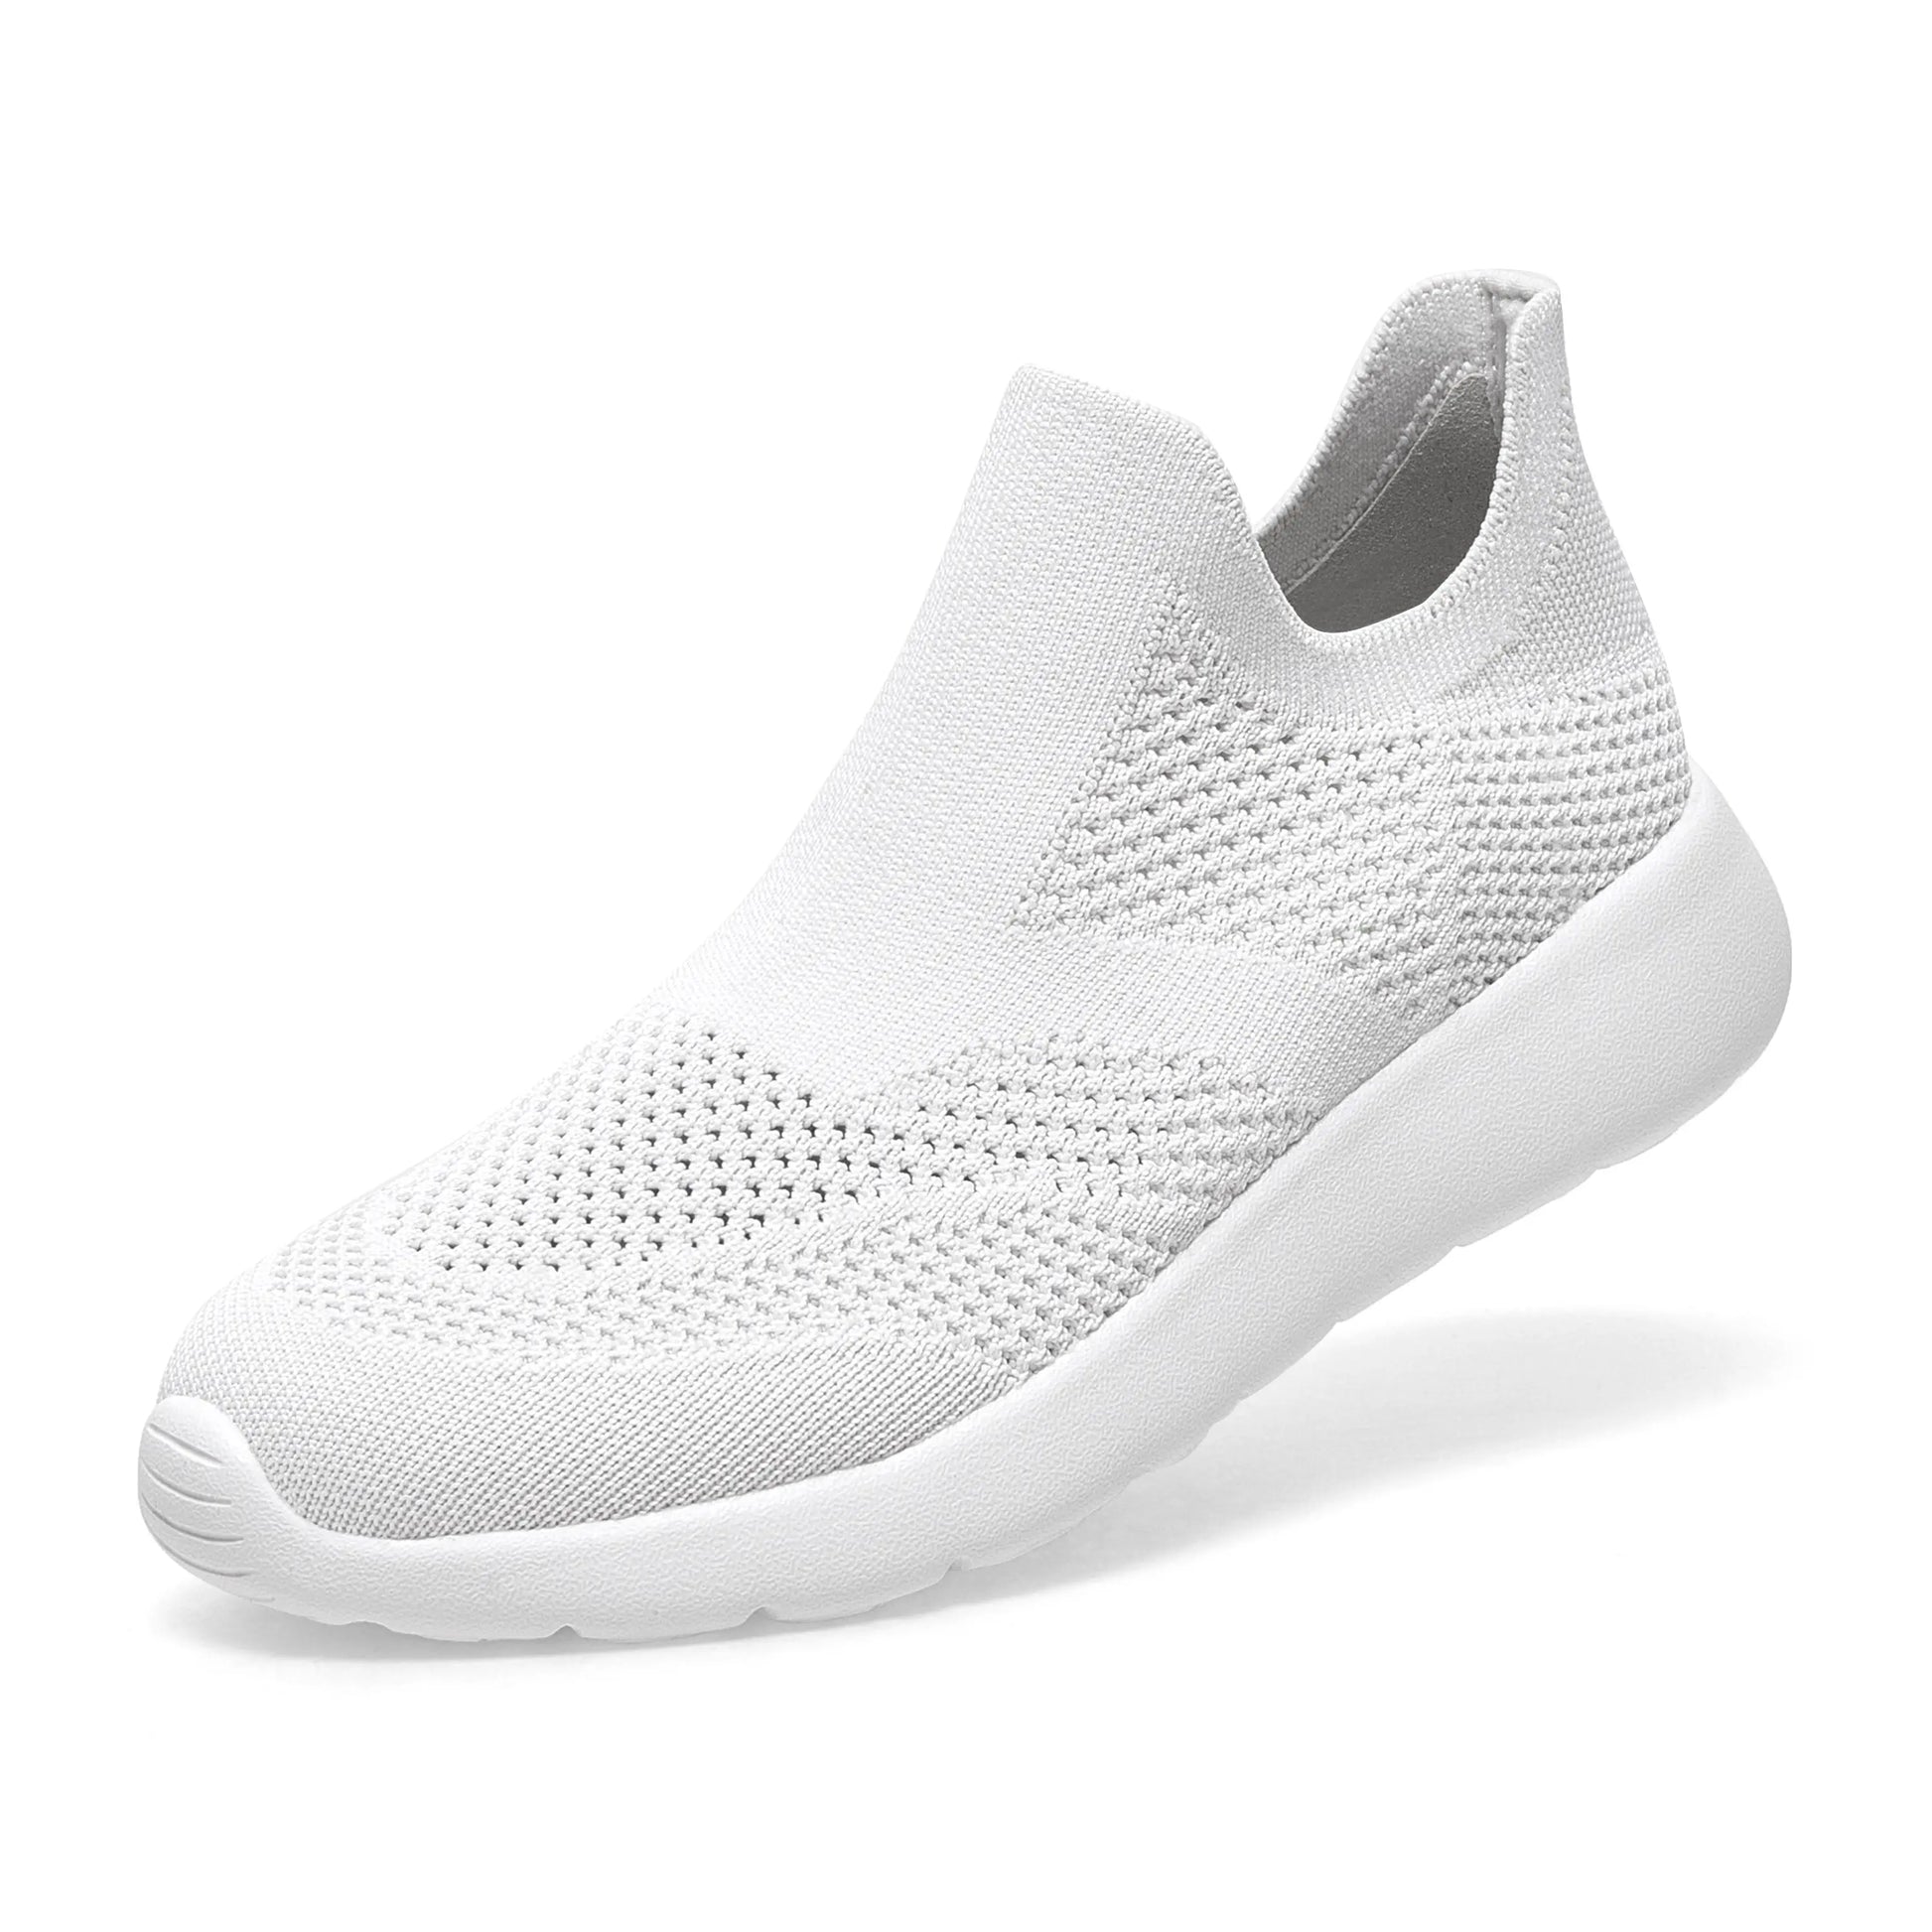 Men's Easy Wash Casual Sneaker Lightweight Comfortable Breathable Walking Shoe Waywalk